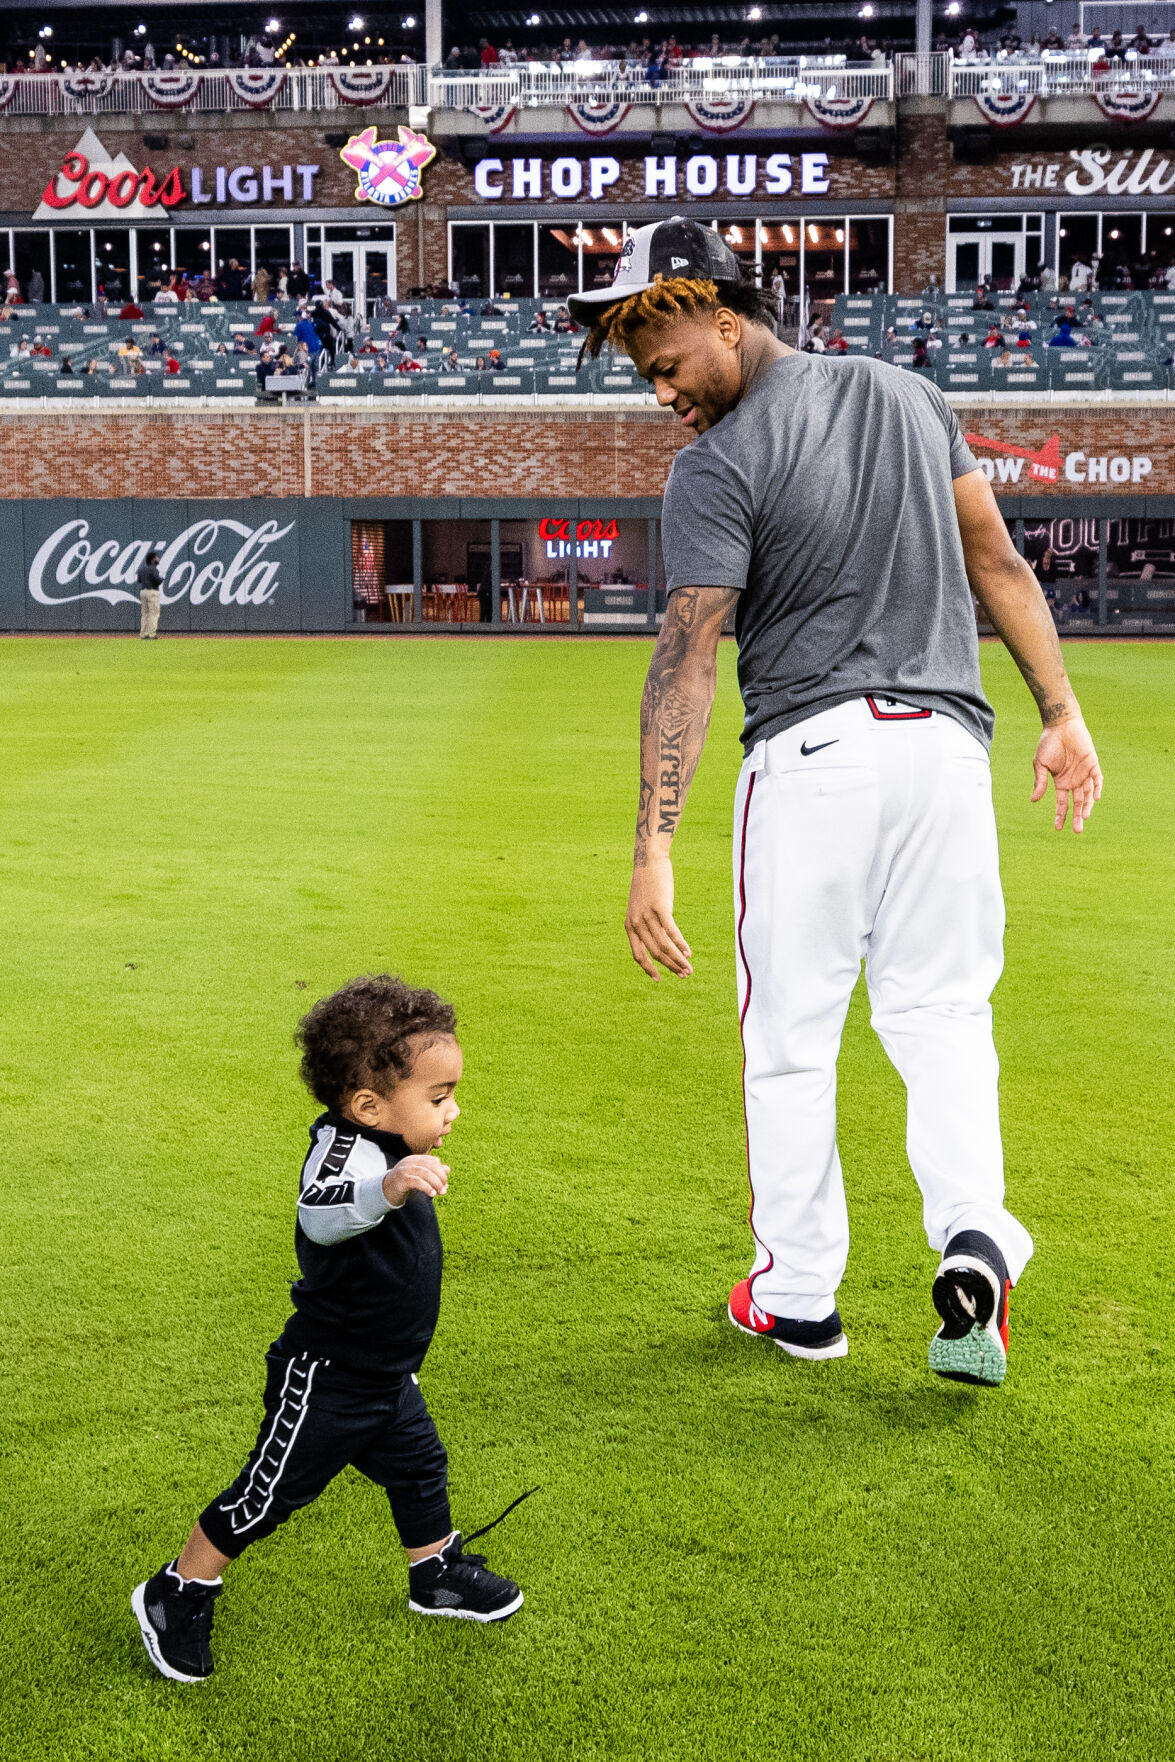 Atlanta Braves on X: “Hey Dad…you wanna have a catch?” #FathersDay